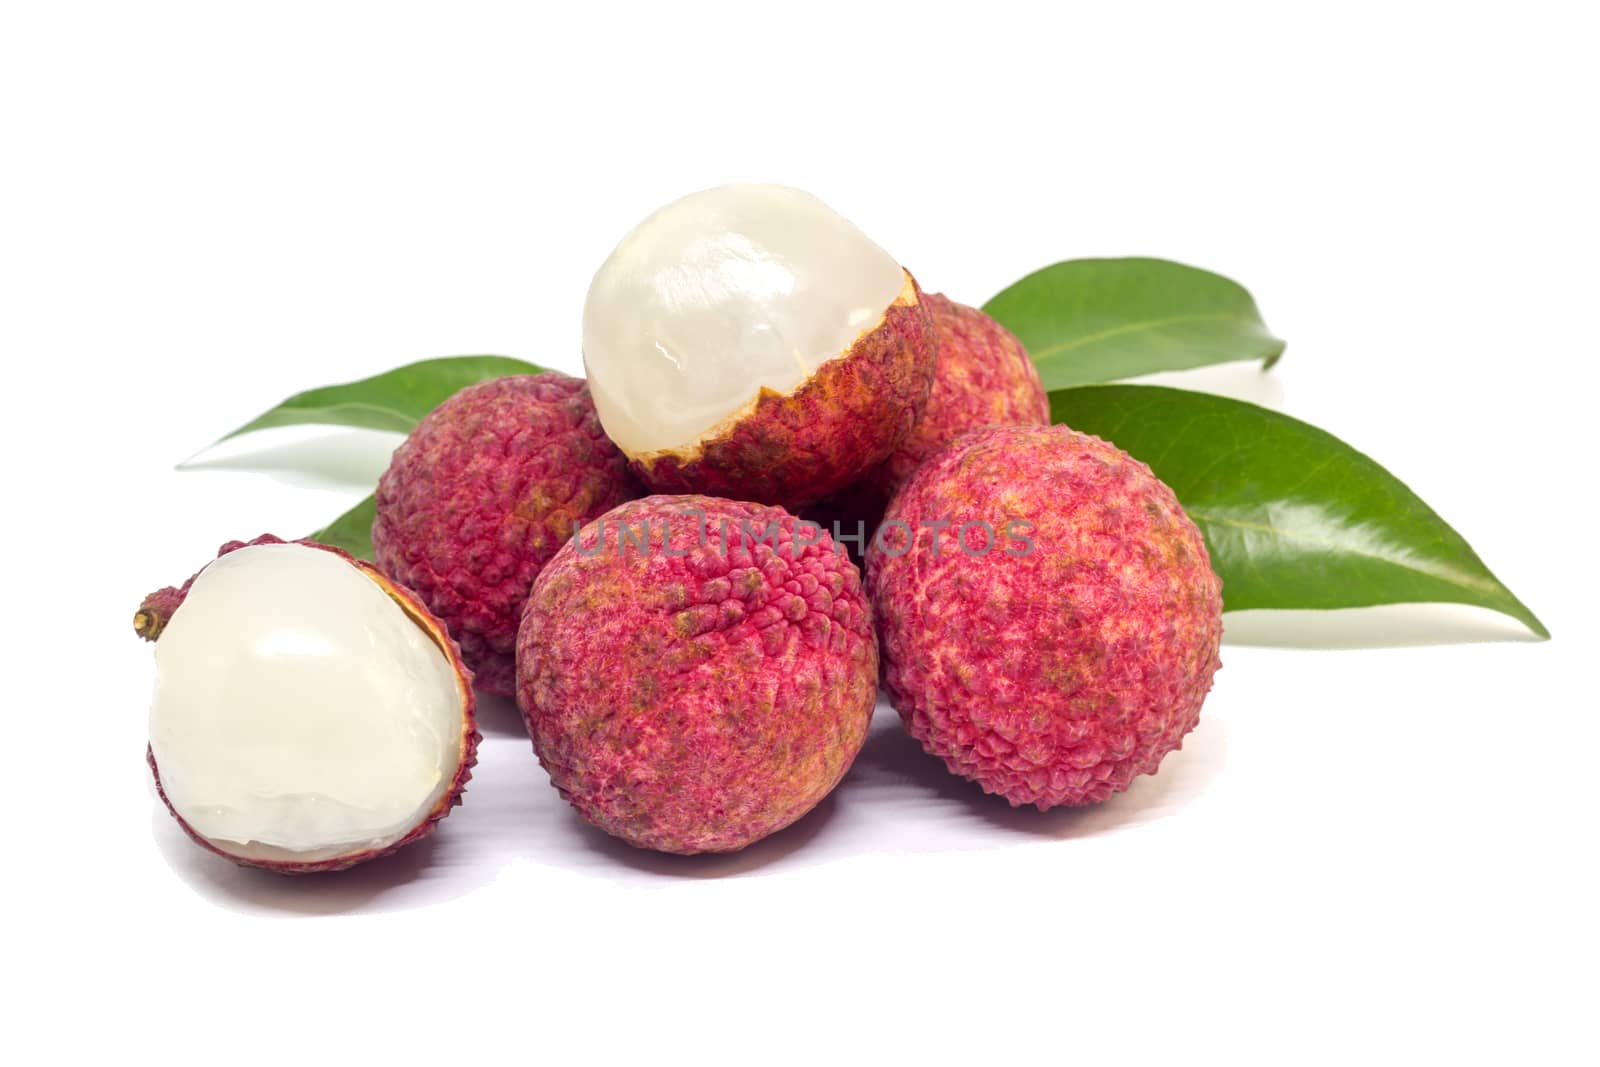 fresh fruit lychee on white background by rakoptonLPN